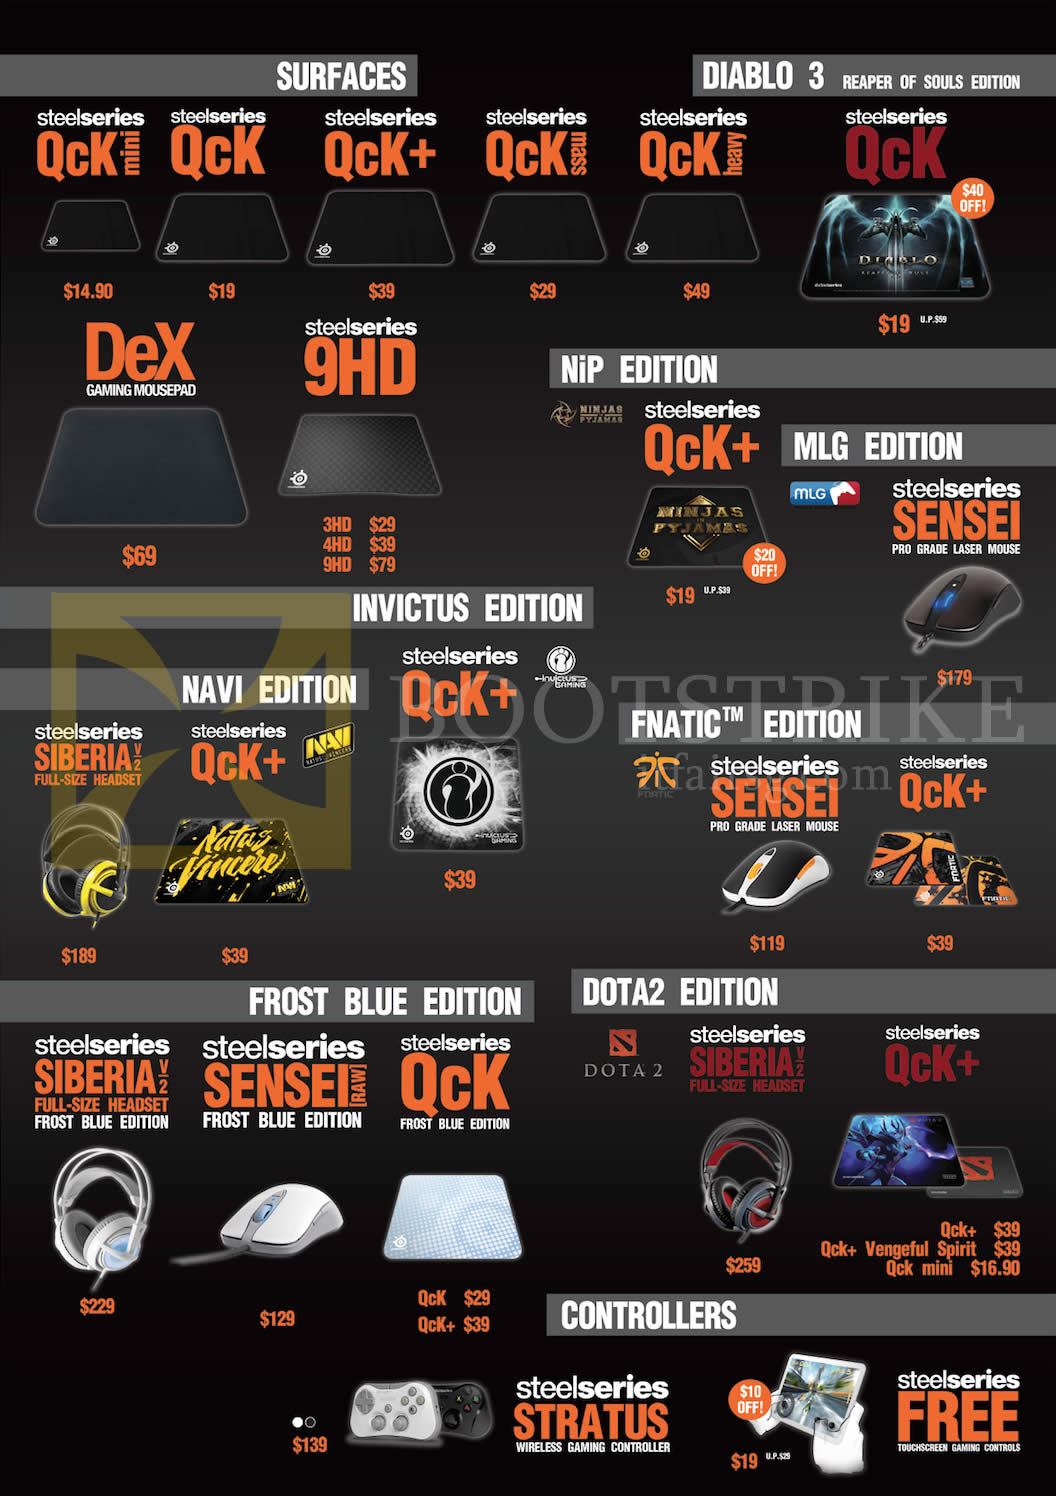 SITEX 2014 price list image brochure of SteelSeries Surfaces, Diablo 3, NiP, Invictus, Fnatic, Navi, Frost Blue, Dota2 Edition, Controllers